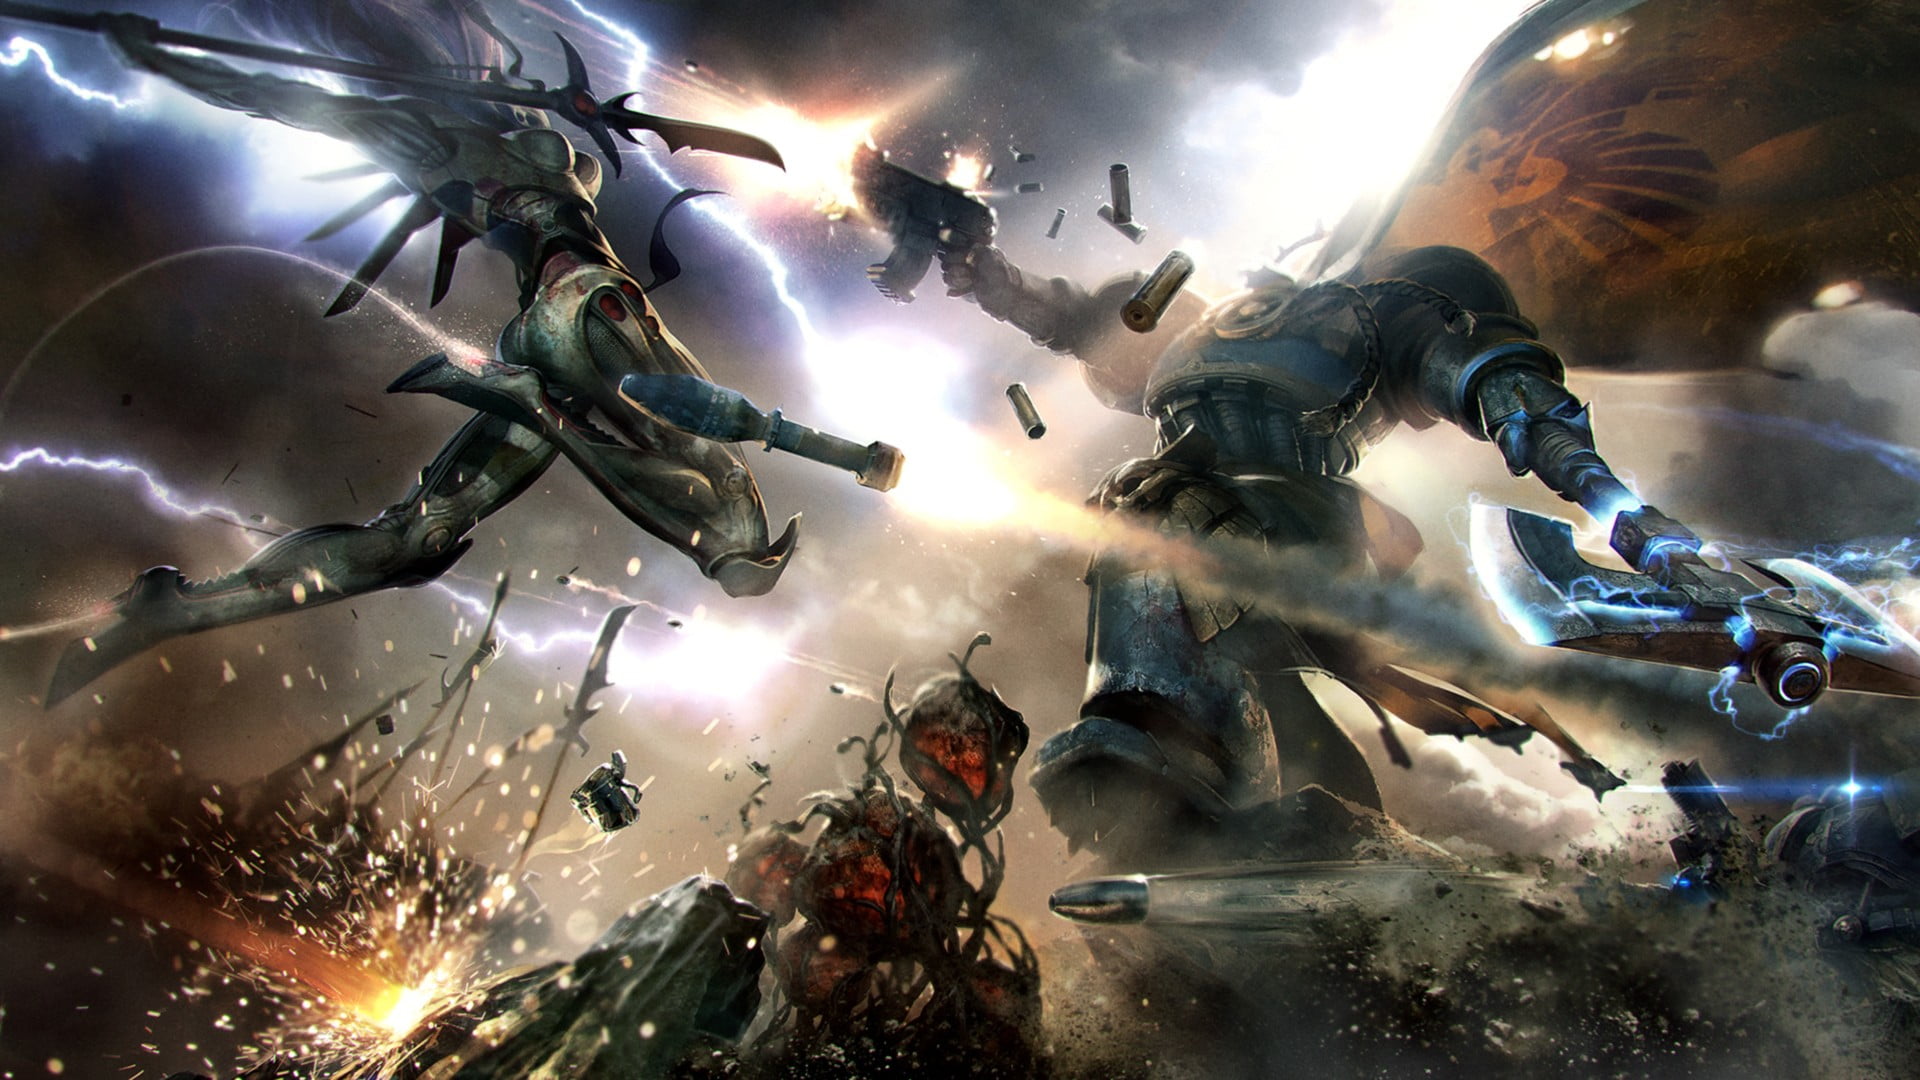 Warhammer digital wallpaper, Warhammer 40,000, Eldar, Ultramarines, battle ...